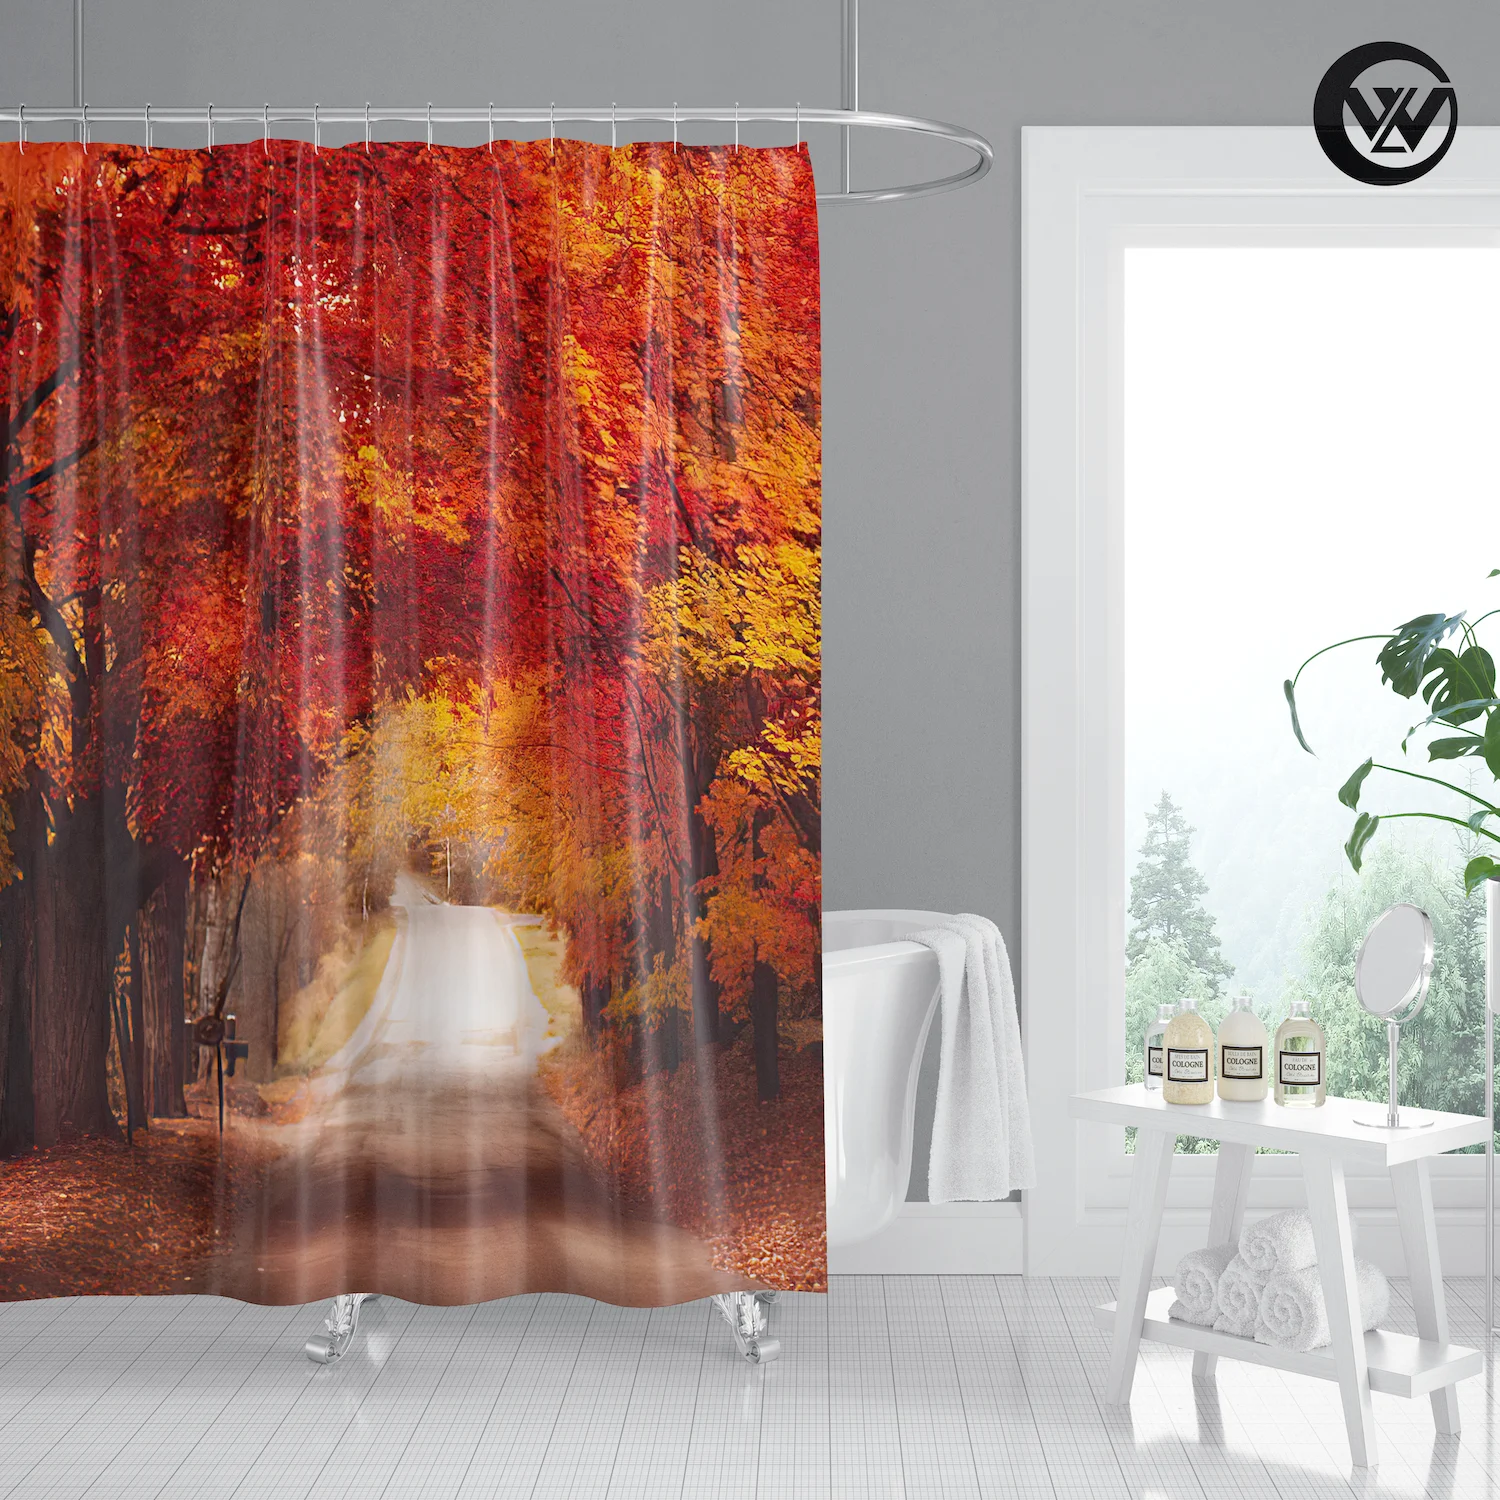 Designers Printed Red Maple Scenery Bathroom Curtain Waterproof Wholesales Eco Friendly Bathtub Shower Curtain Liner Deome